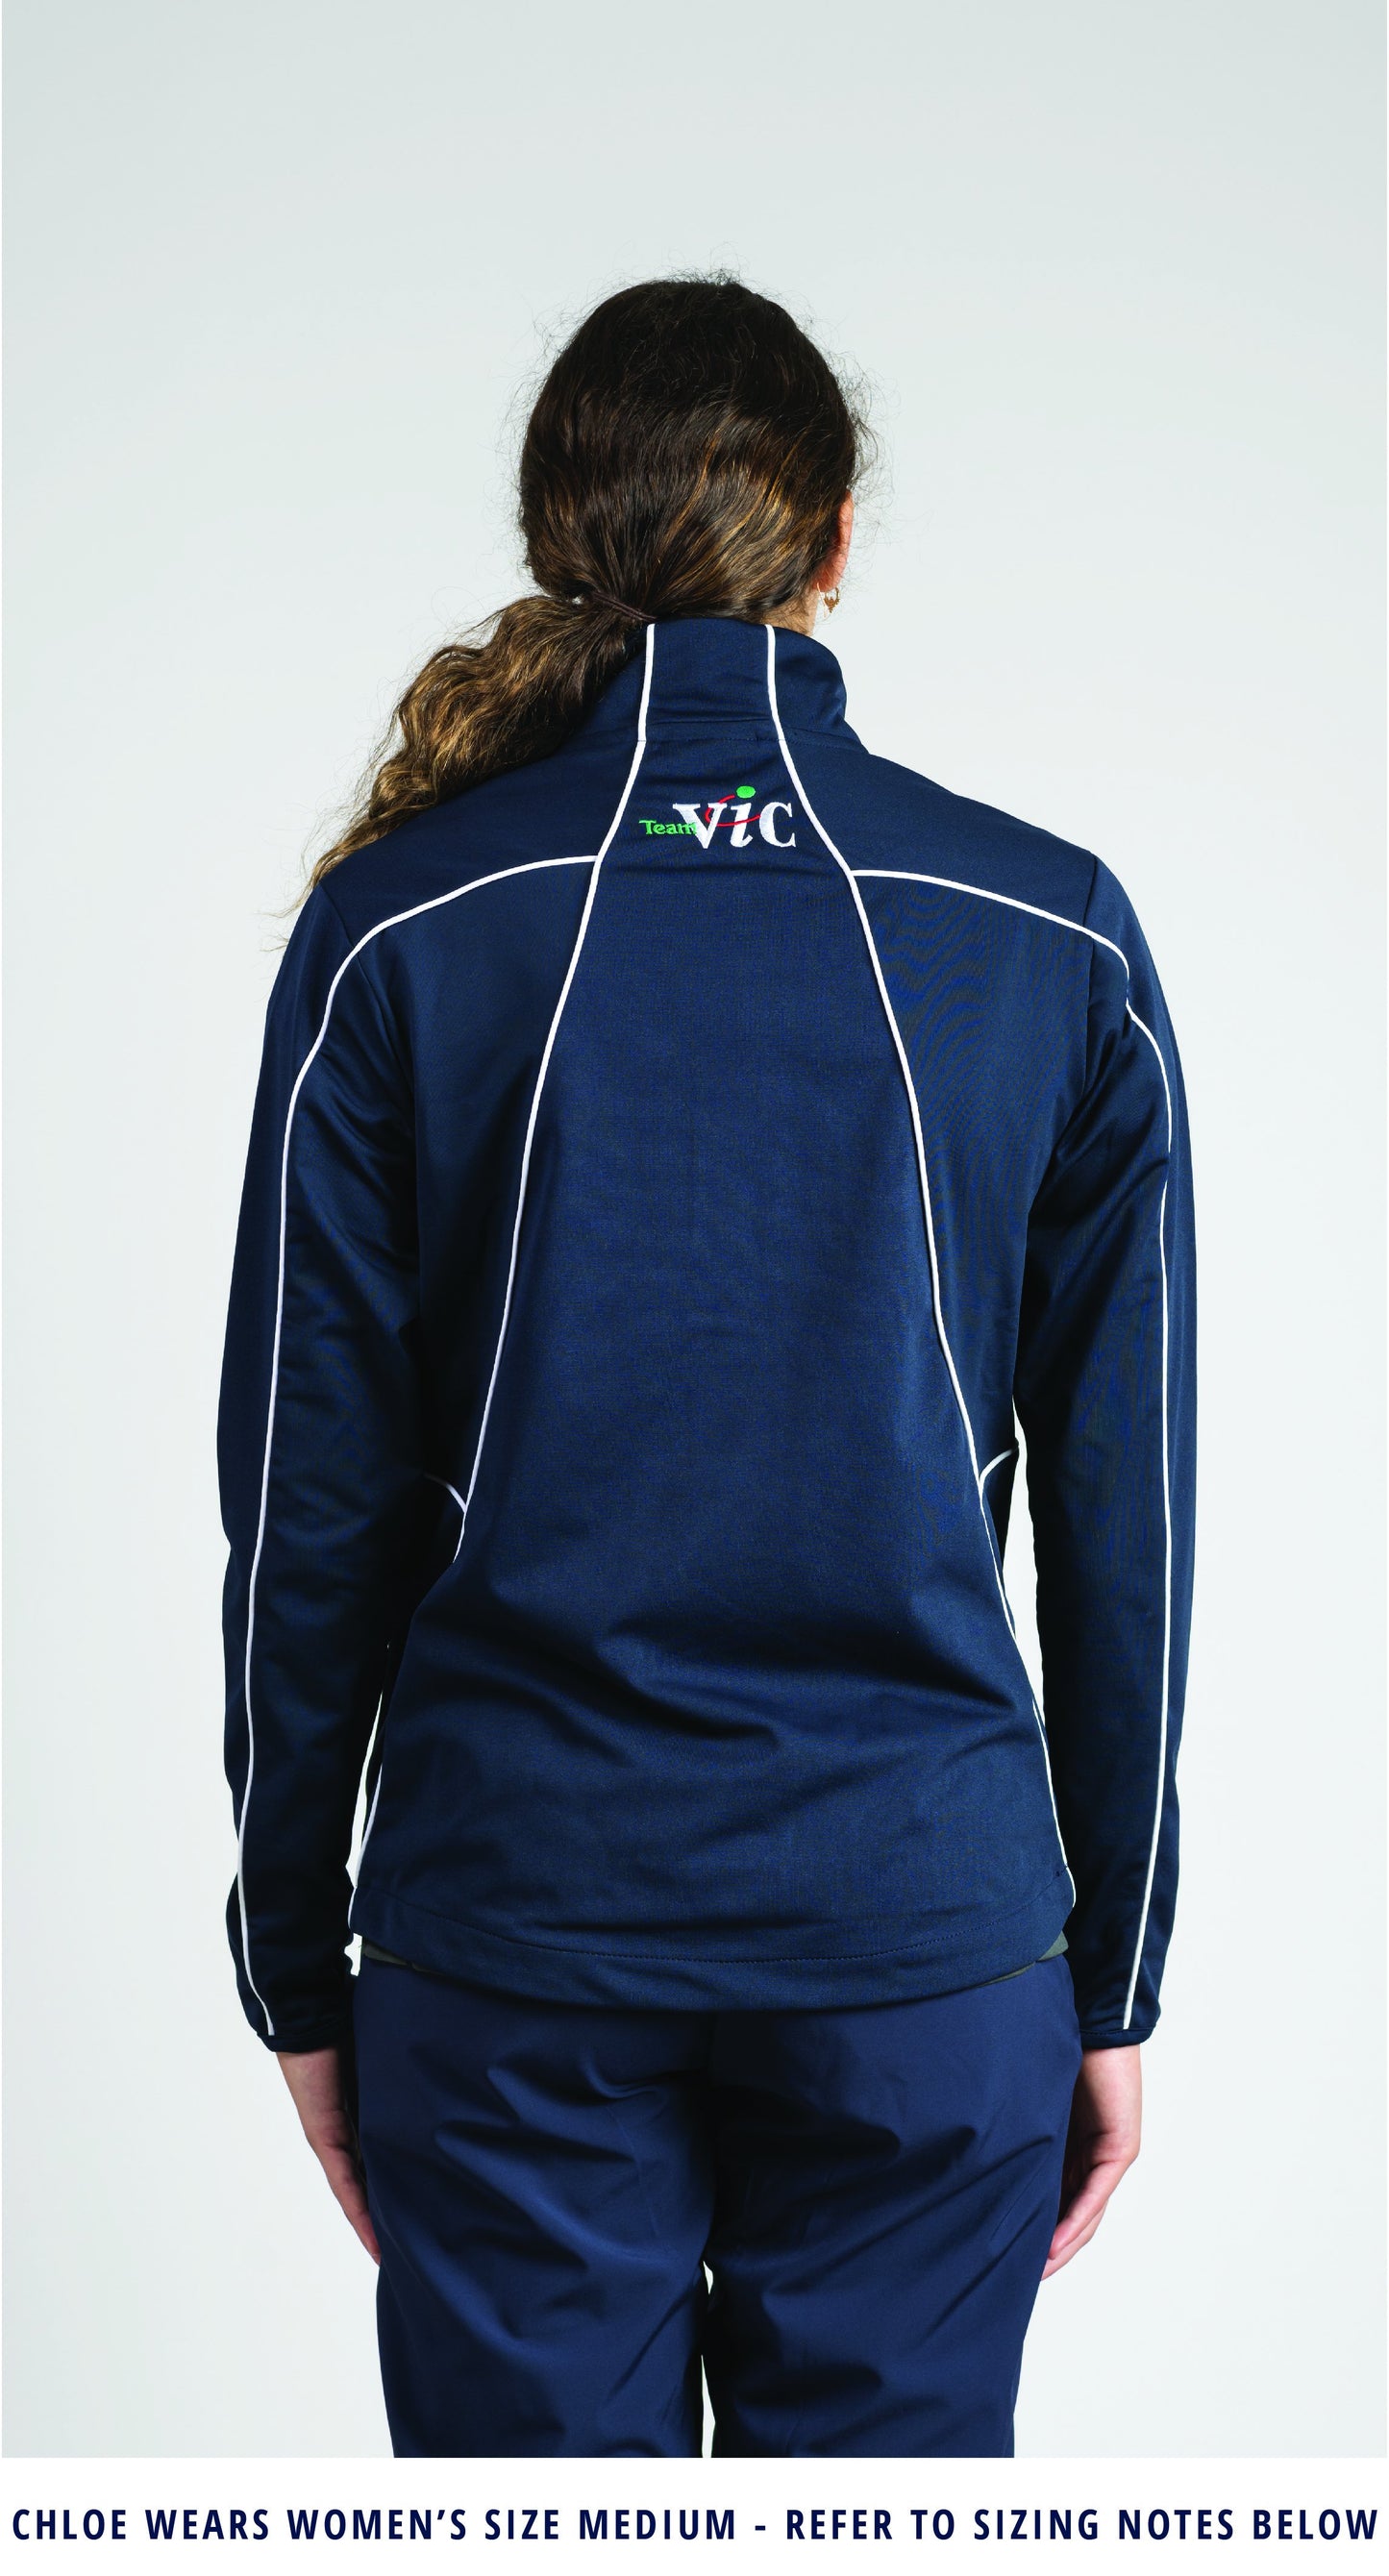 Female Team Vic FlexDry Track Jacket (Walk Out)